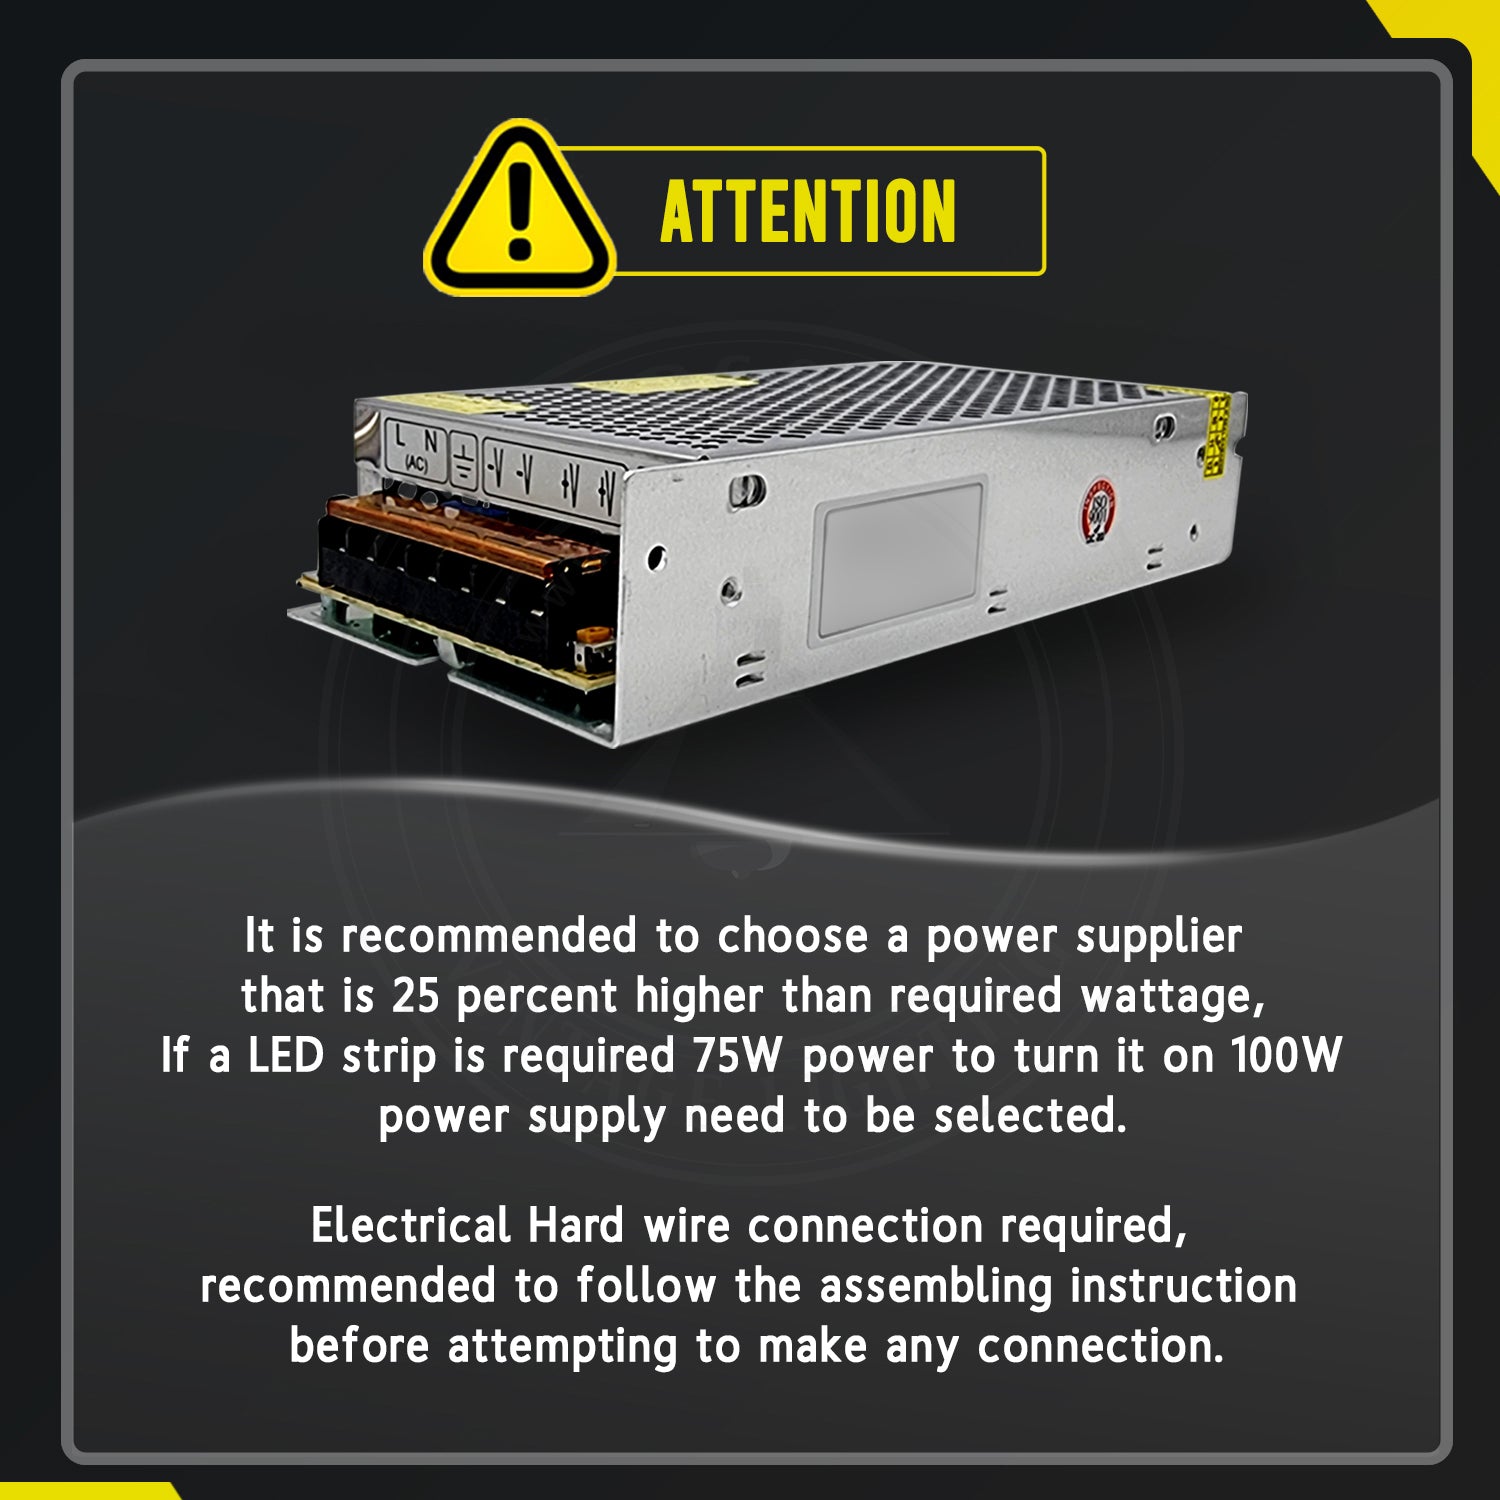 LED Transformer Attention Image